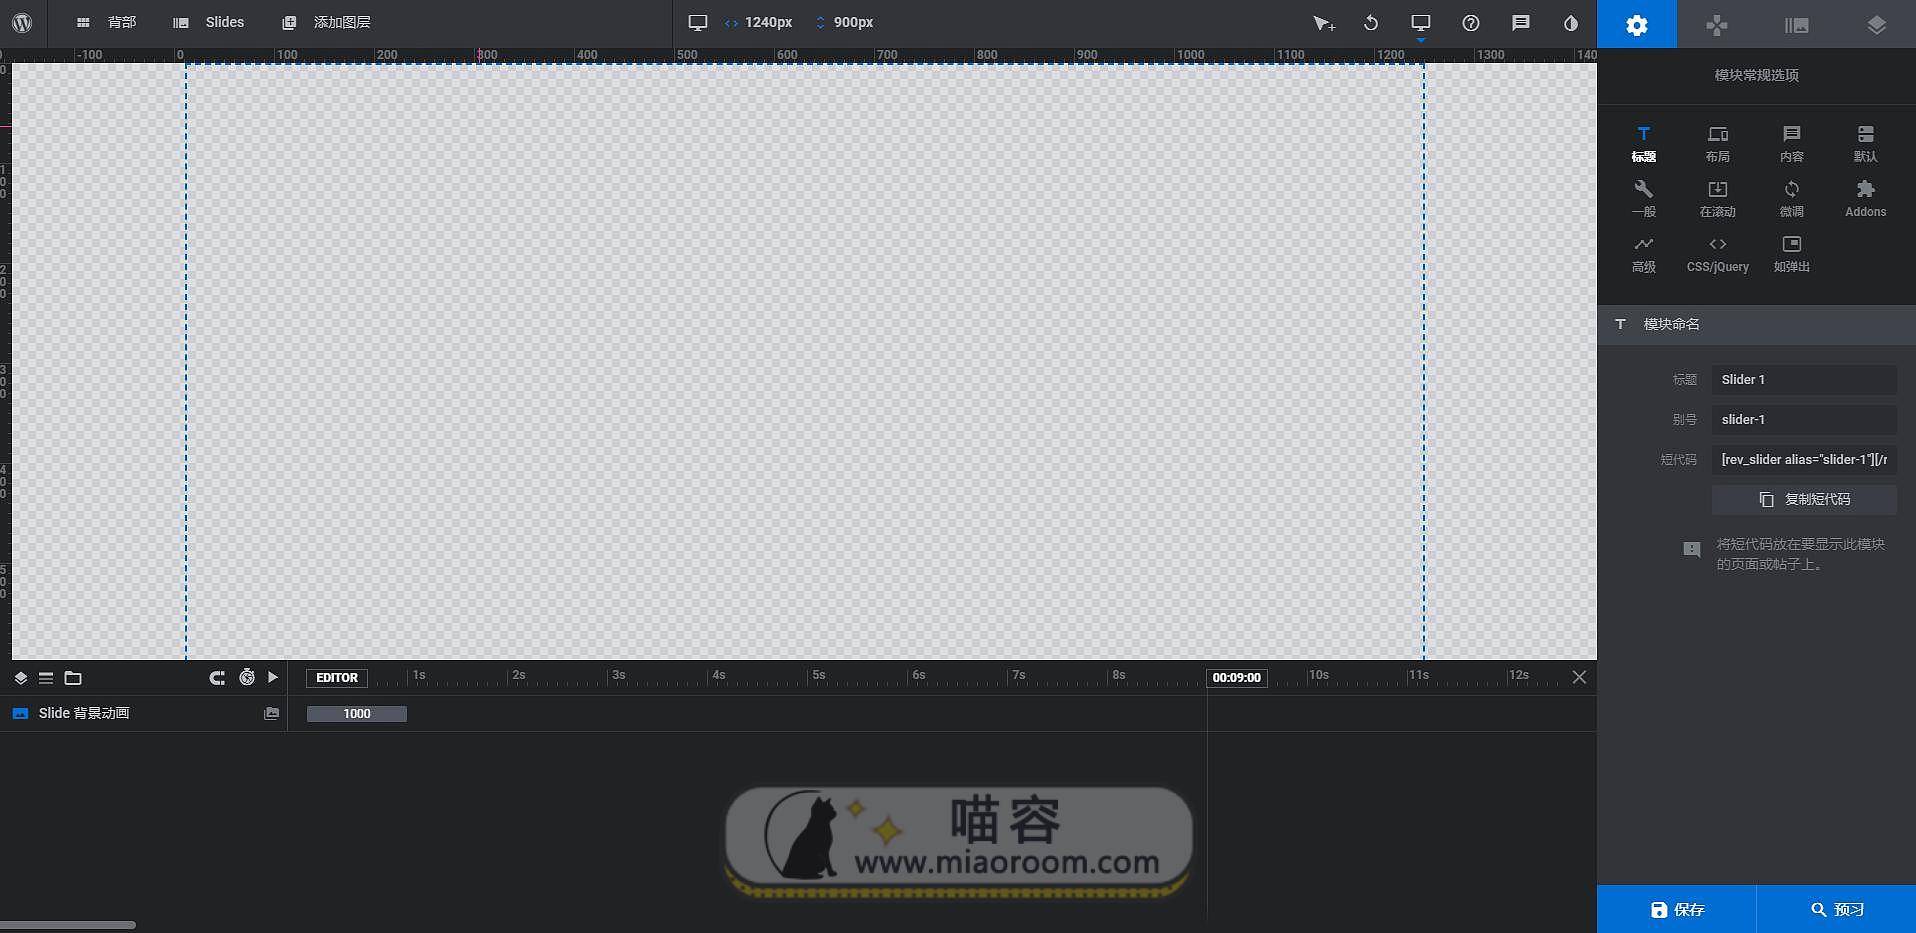 「WP插件」视差轮播图 Slider Revolution v6.1.2 已更新 高级专业版 【中文汉化】